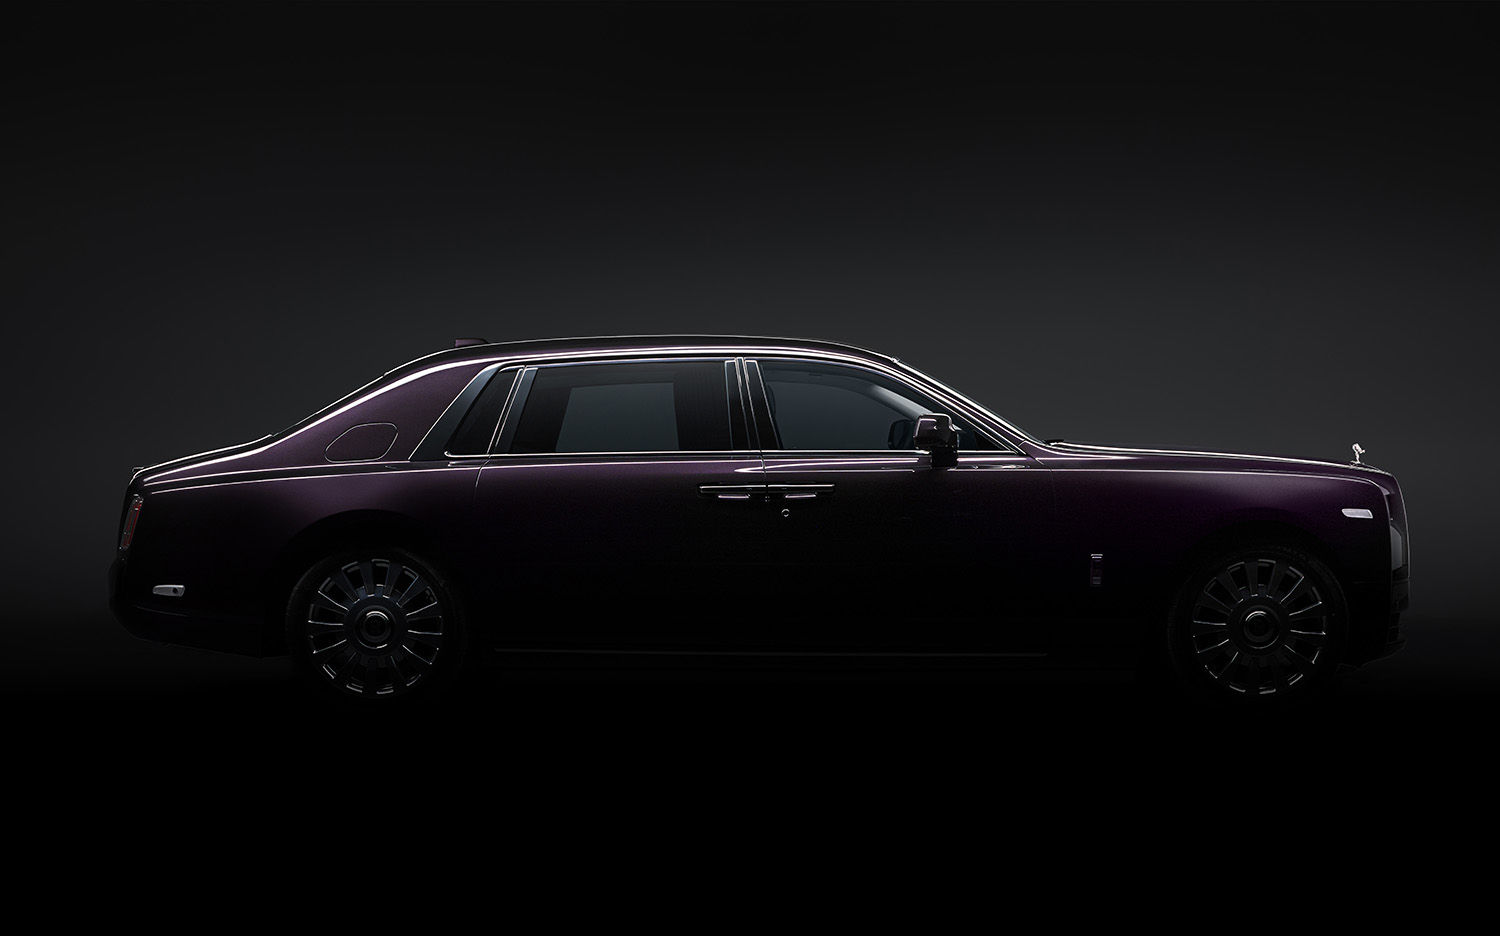 Rolls-Royce reveals its grandest luxury saloon yet: The Phantom VIII